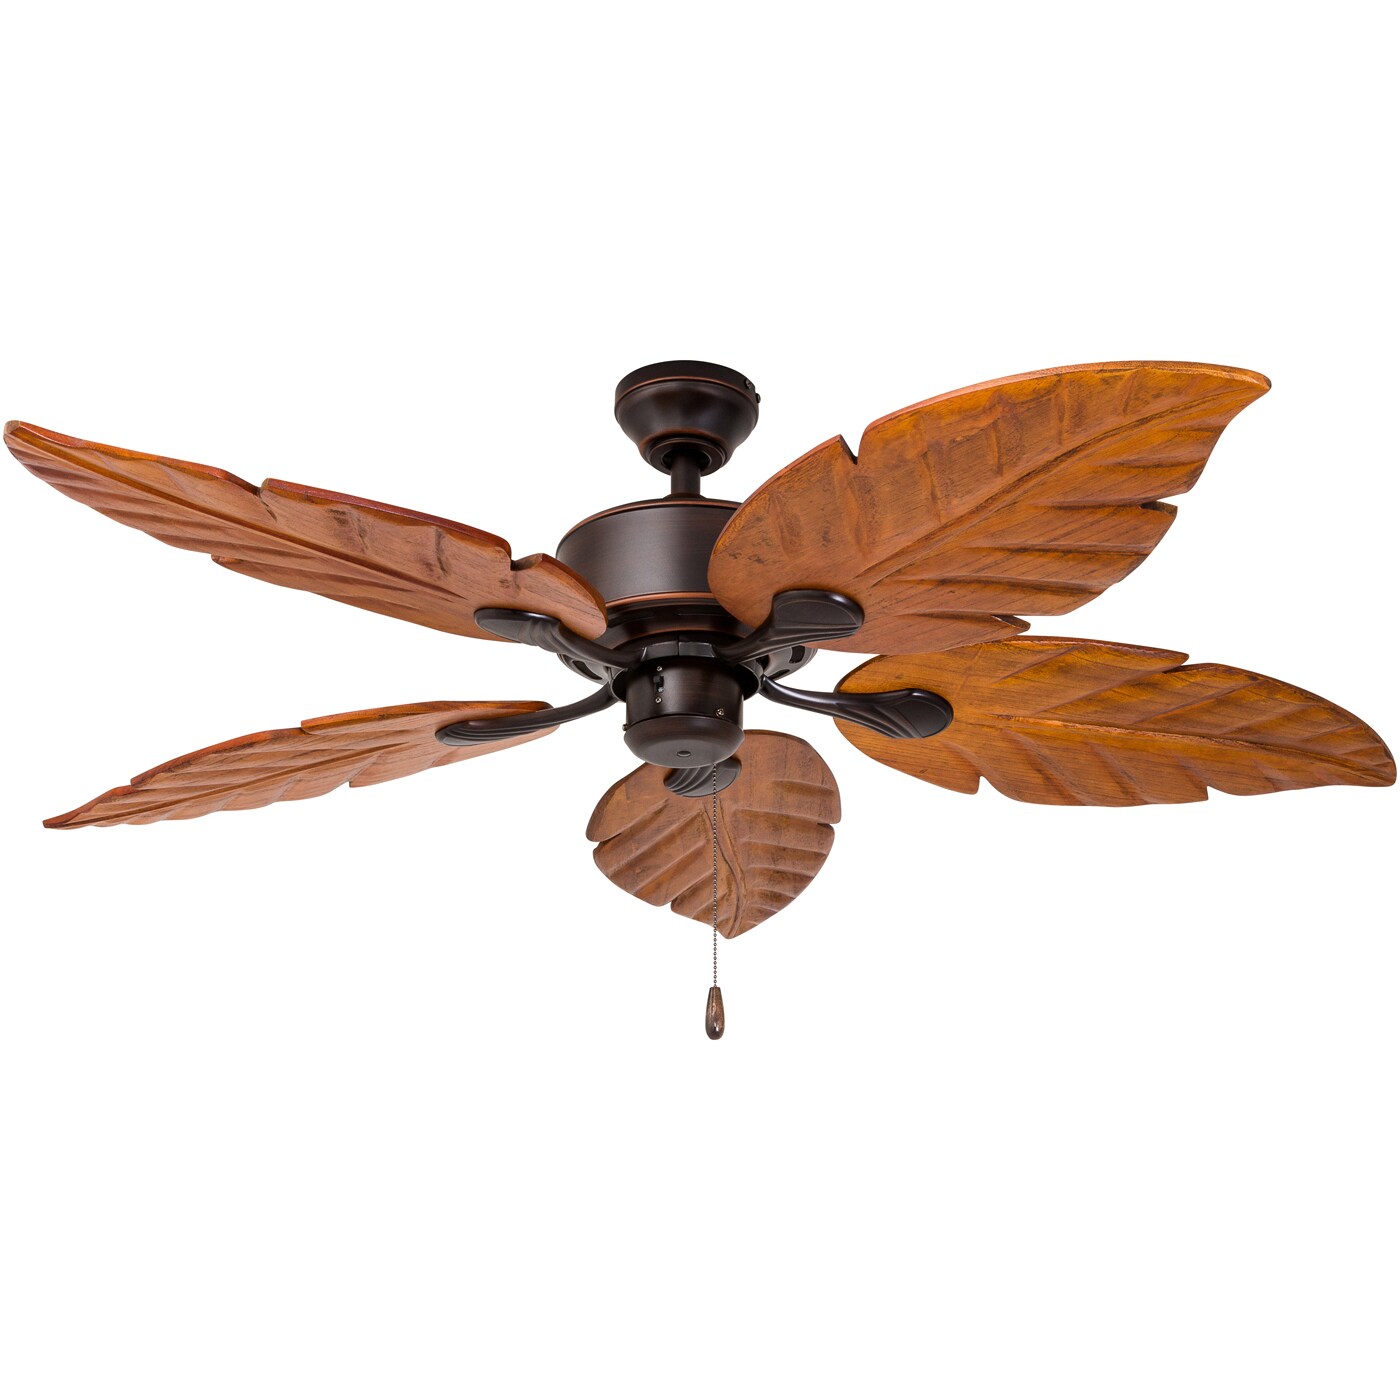 Farmington Ceiling Fan 3 Speed Quiet Large Room 52 Inch Indoor Oil Rubbed Bronze 